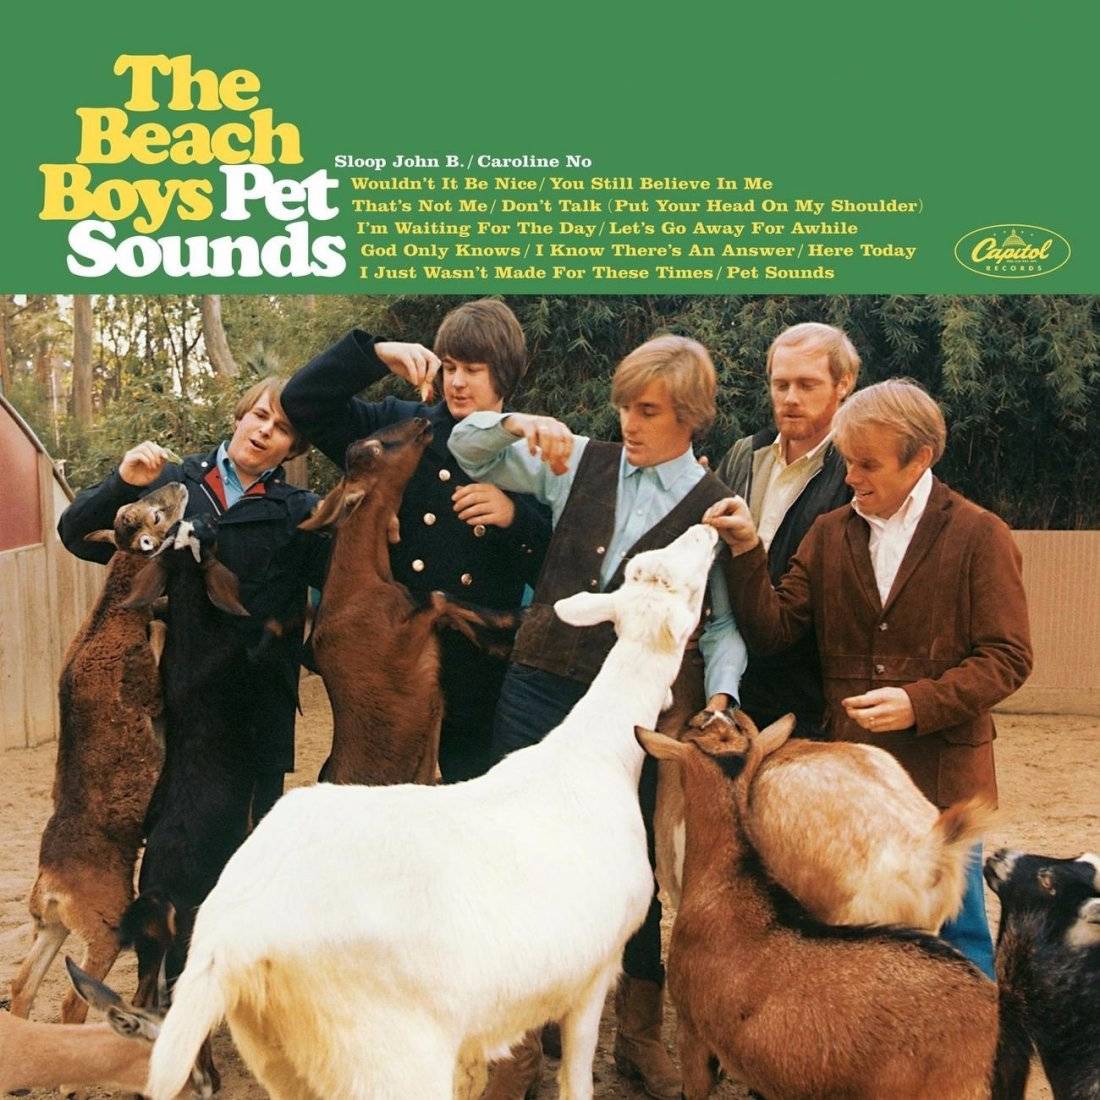 The Beach Boys - Pet Sounds (stereo)